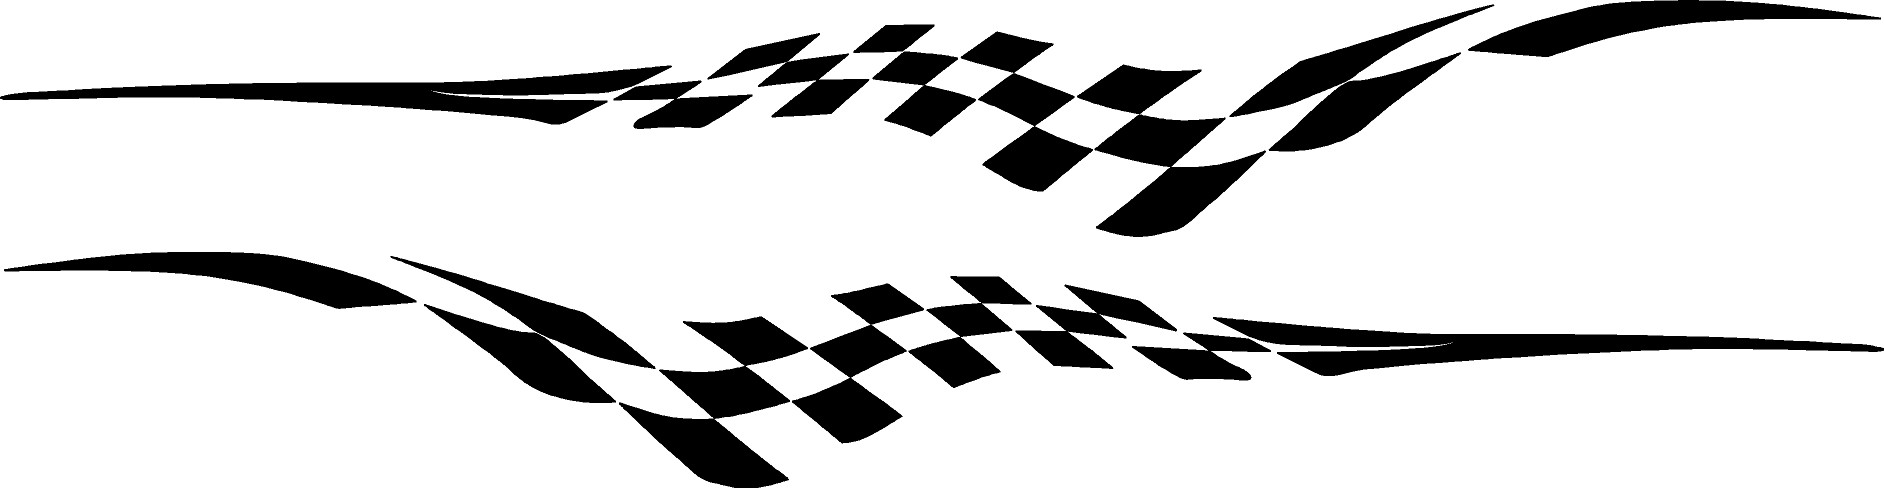 Race car vinyl graphics, Checkered racing auto graphics Xtreme. 